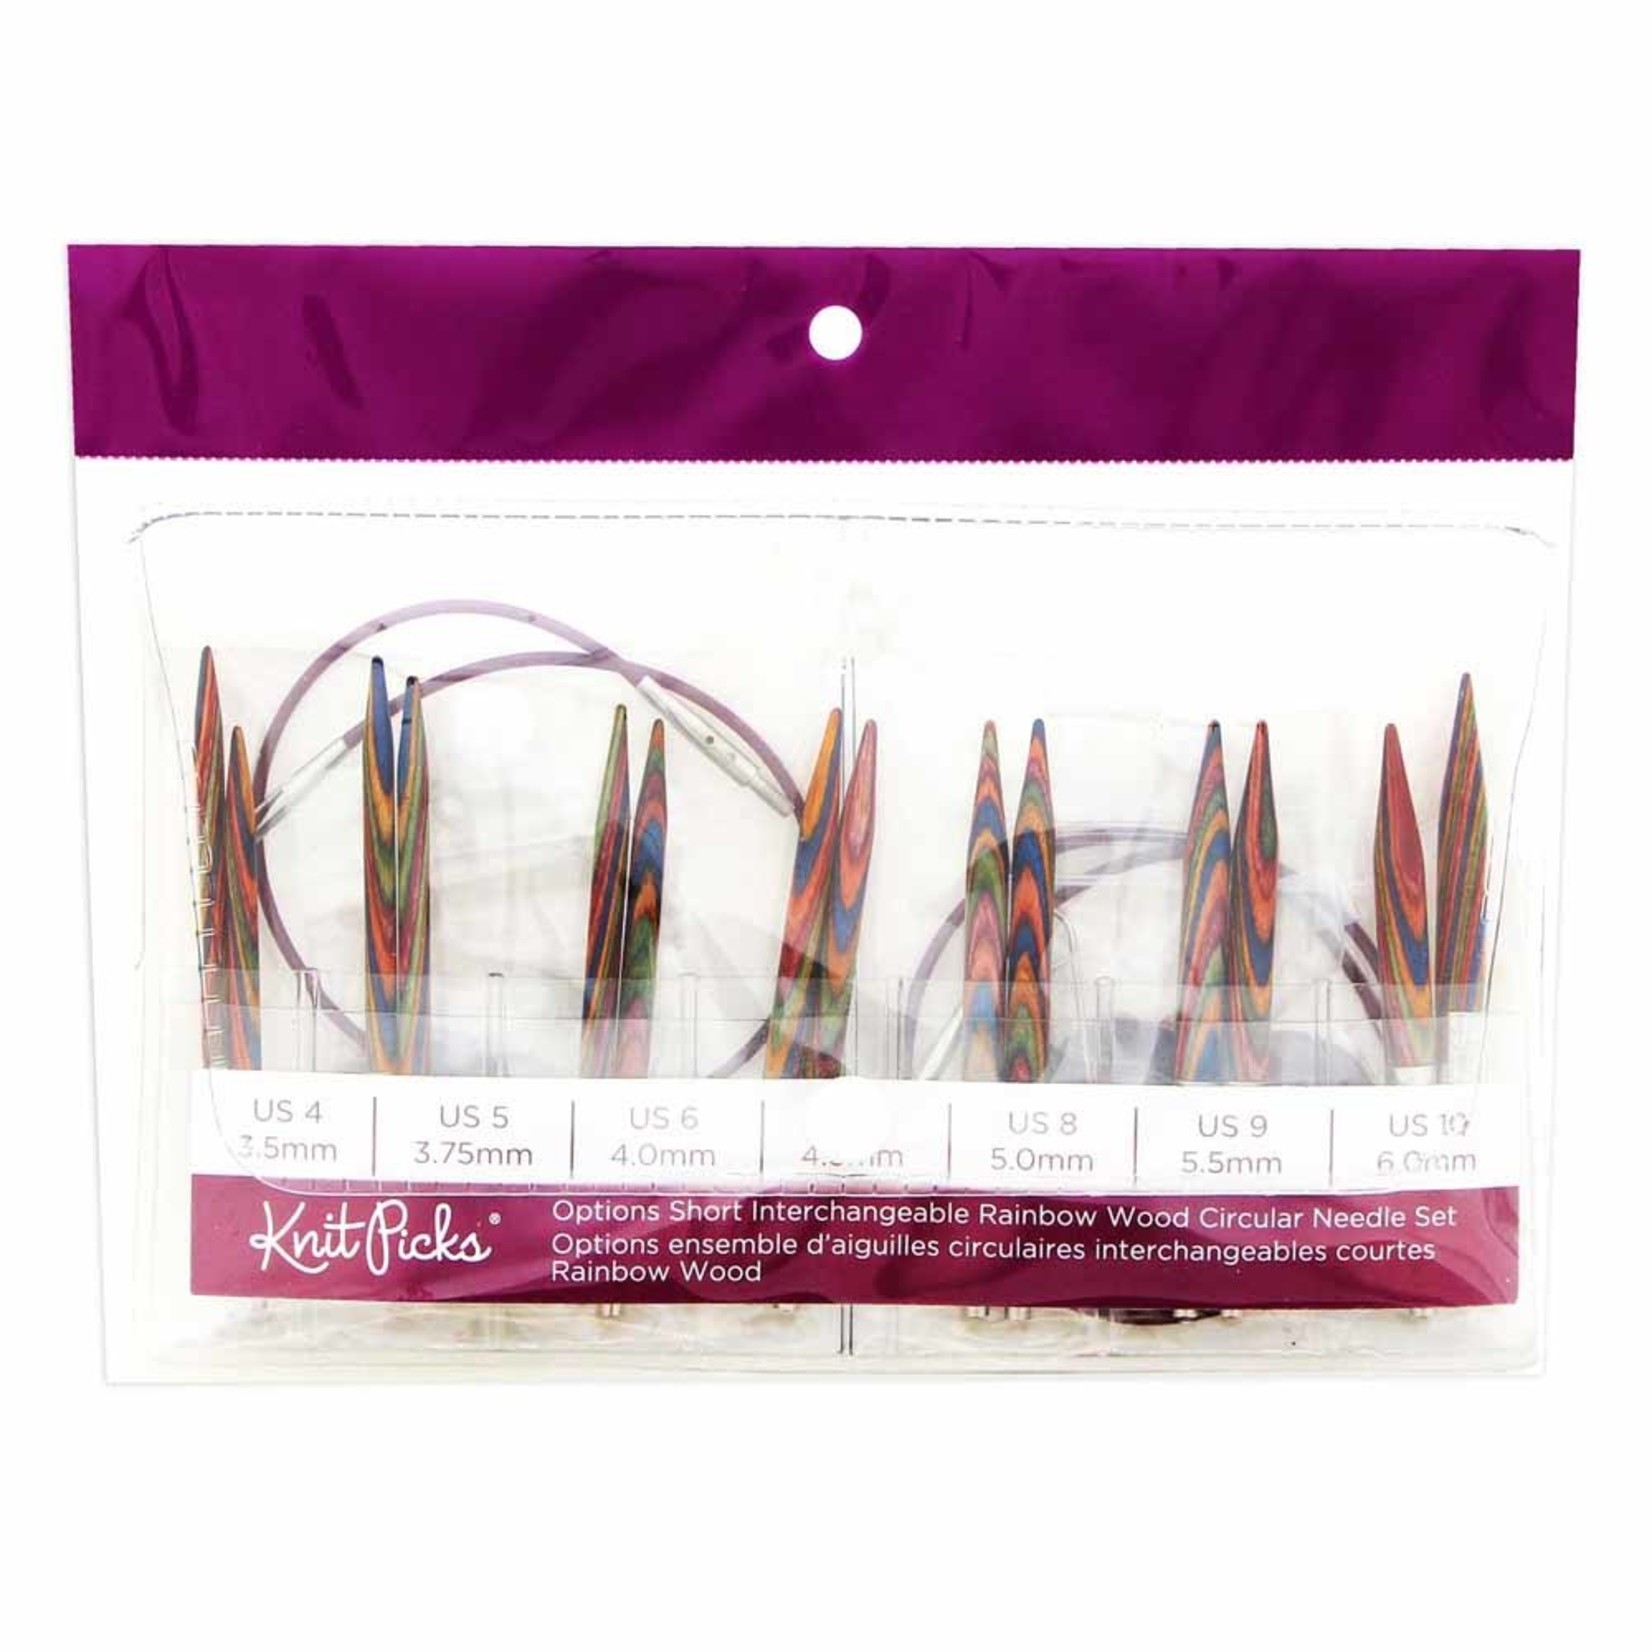 Knit Picks KNIT PICKS Rainbow Wood Options Short Interchangeable Circular Needle Set